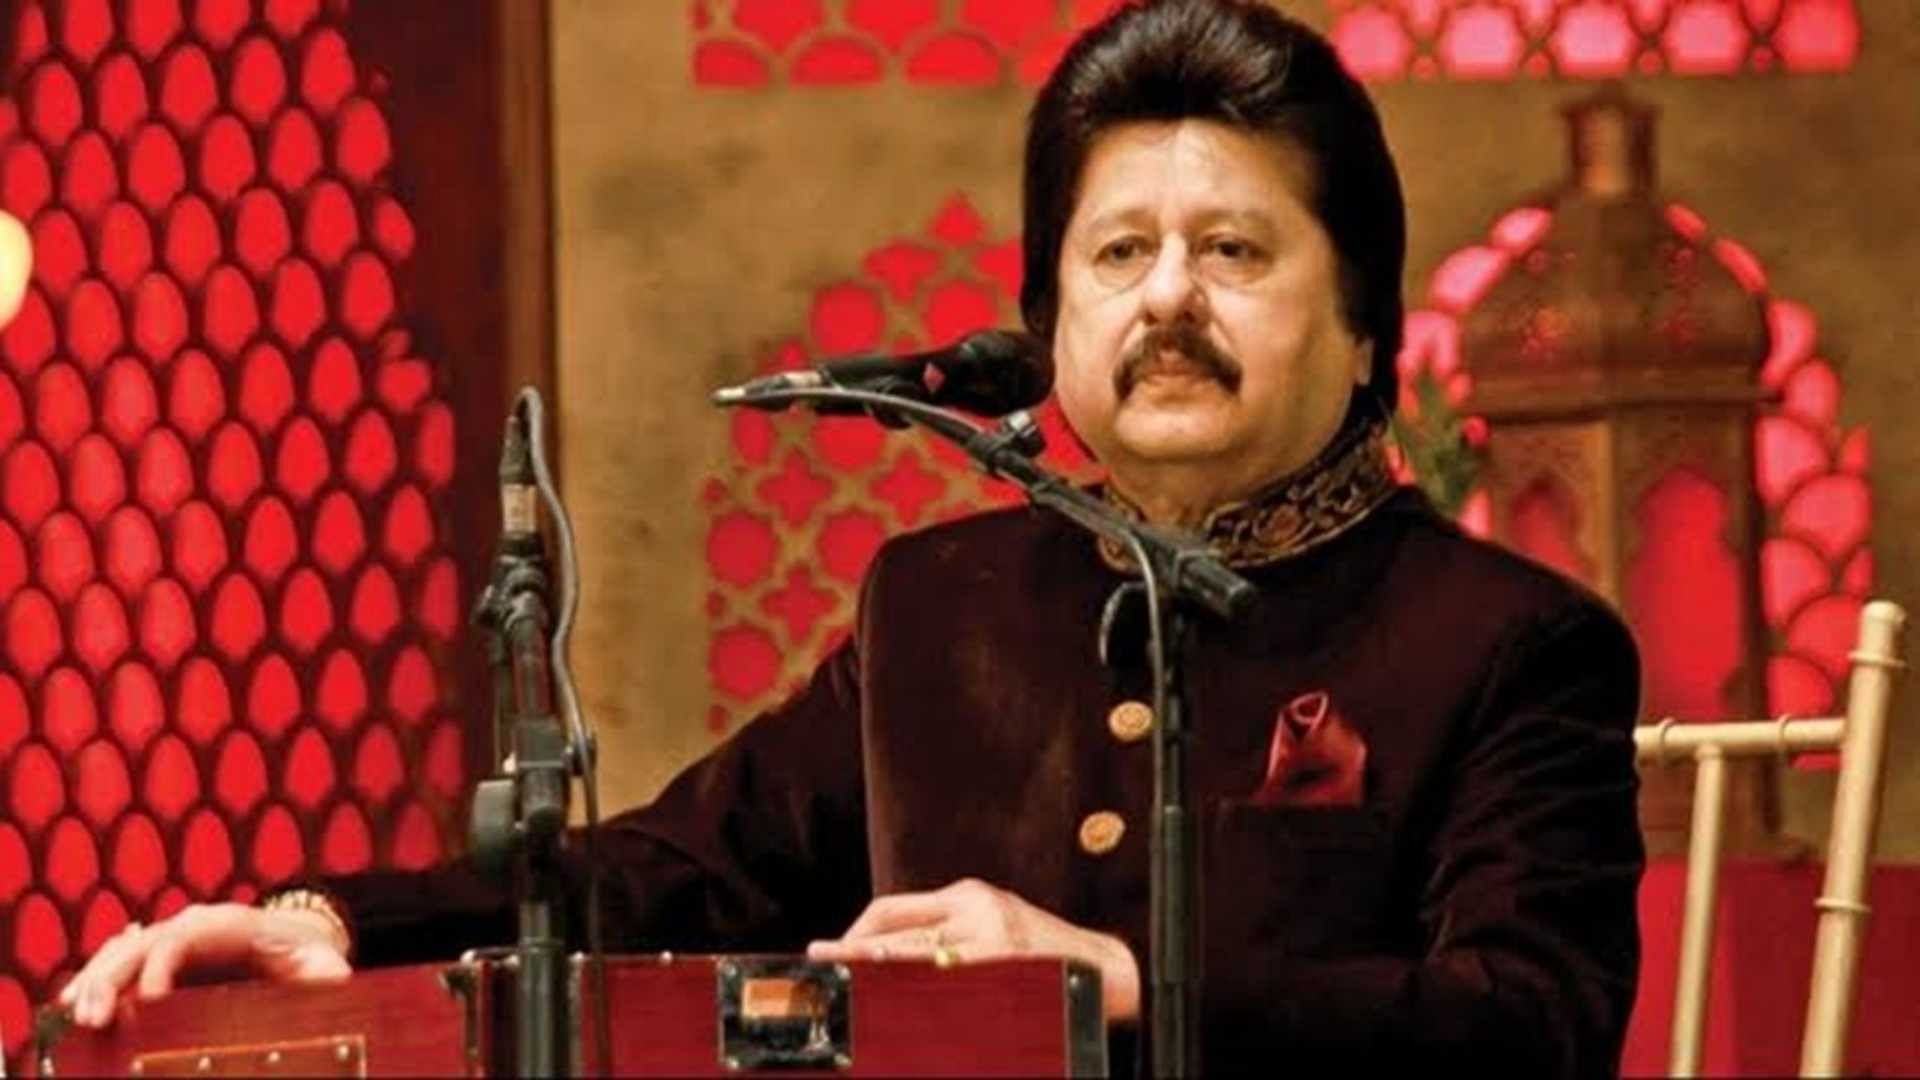 Singer Pankaj Udhas connection with Hathras